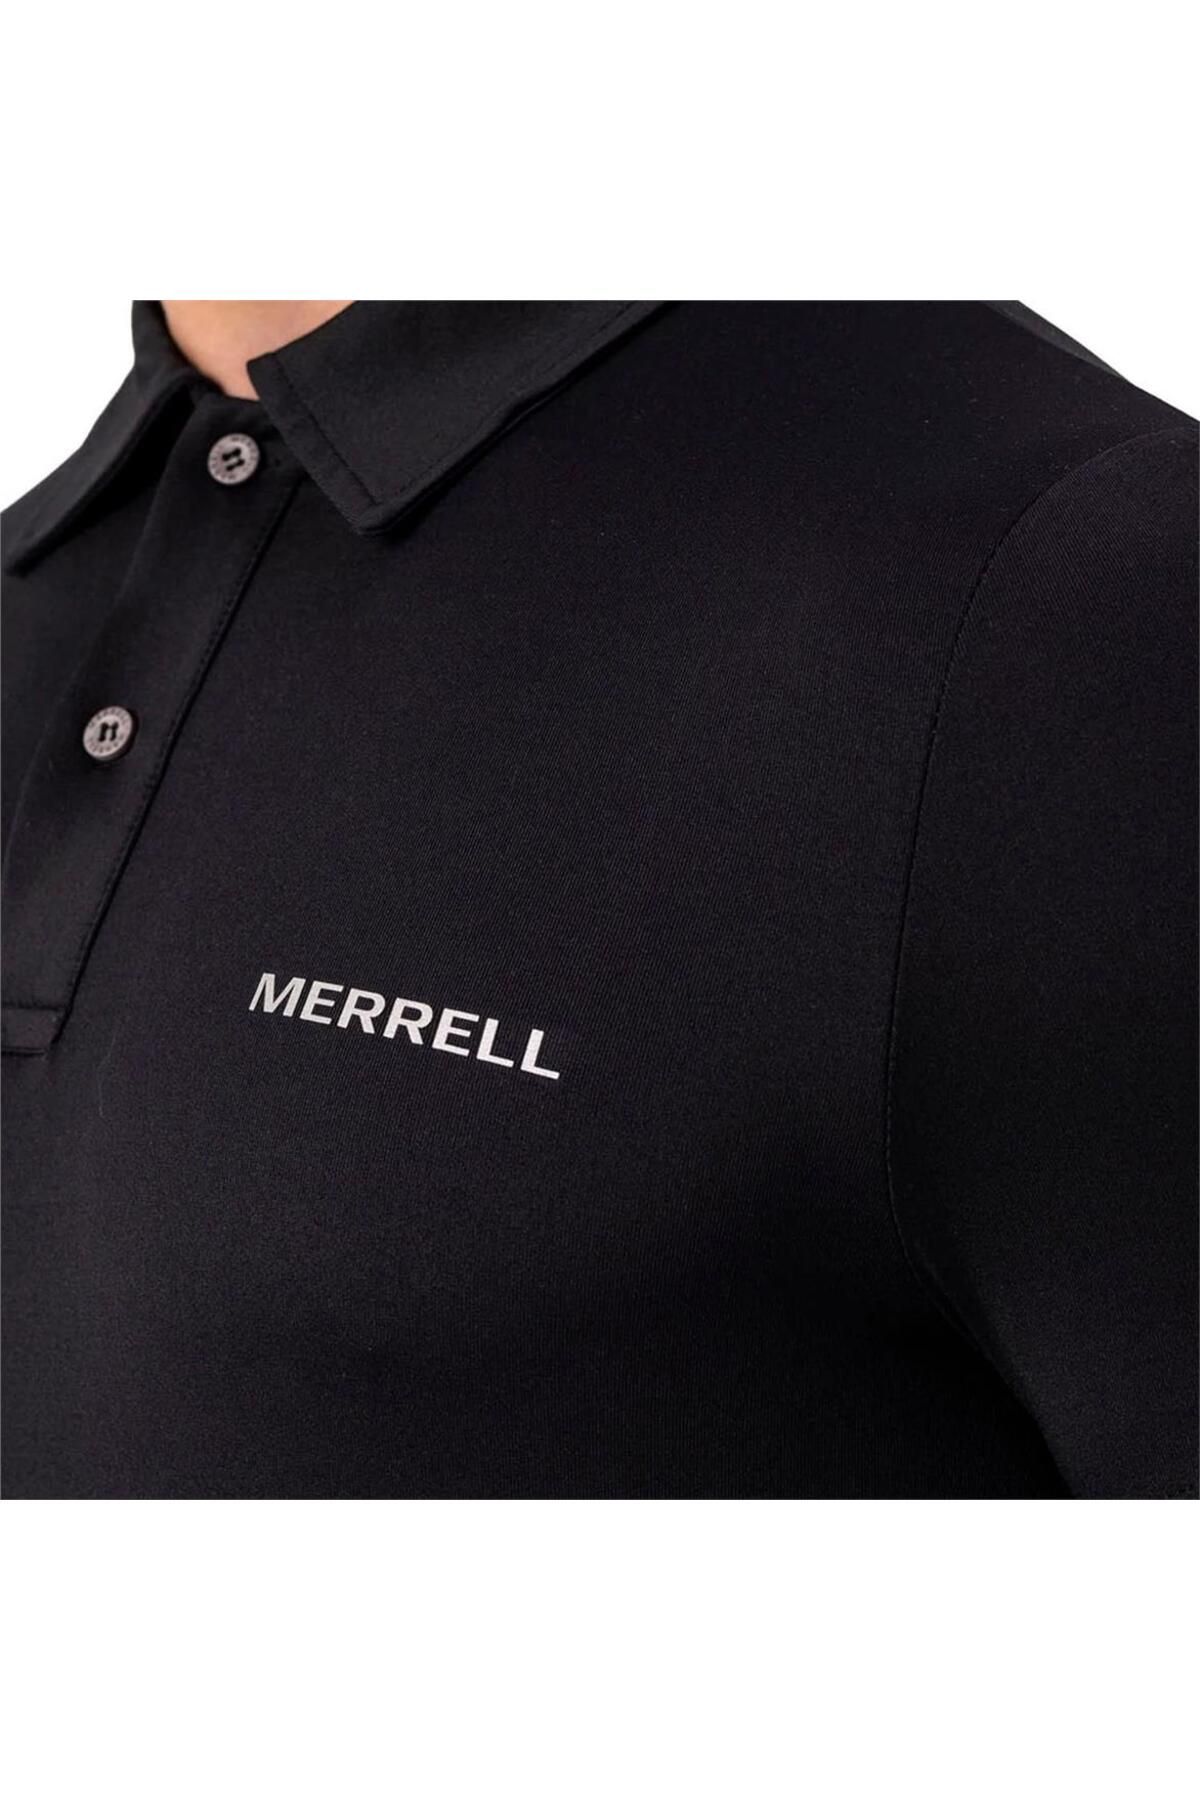 Merrell Pace M Erkek Siyah Polo T-shirt